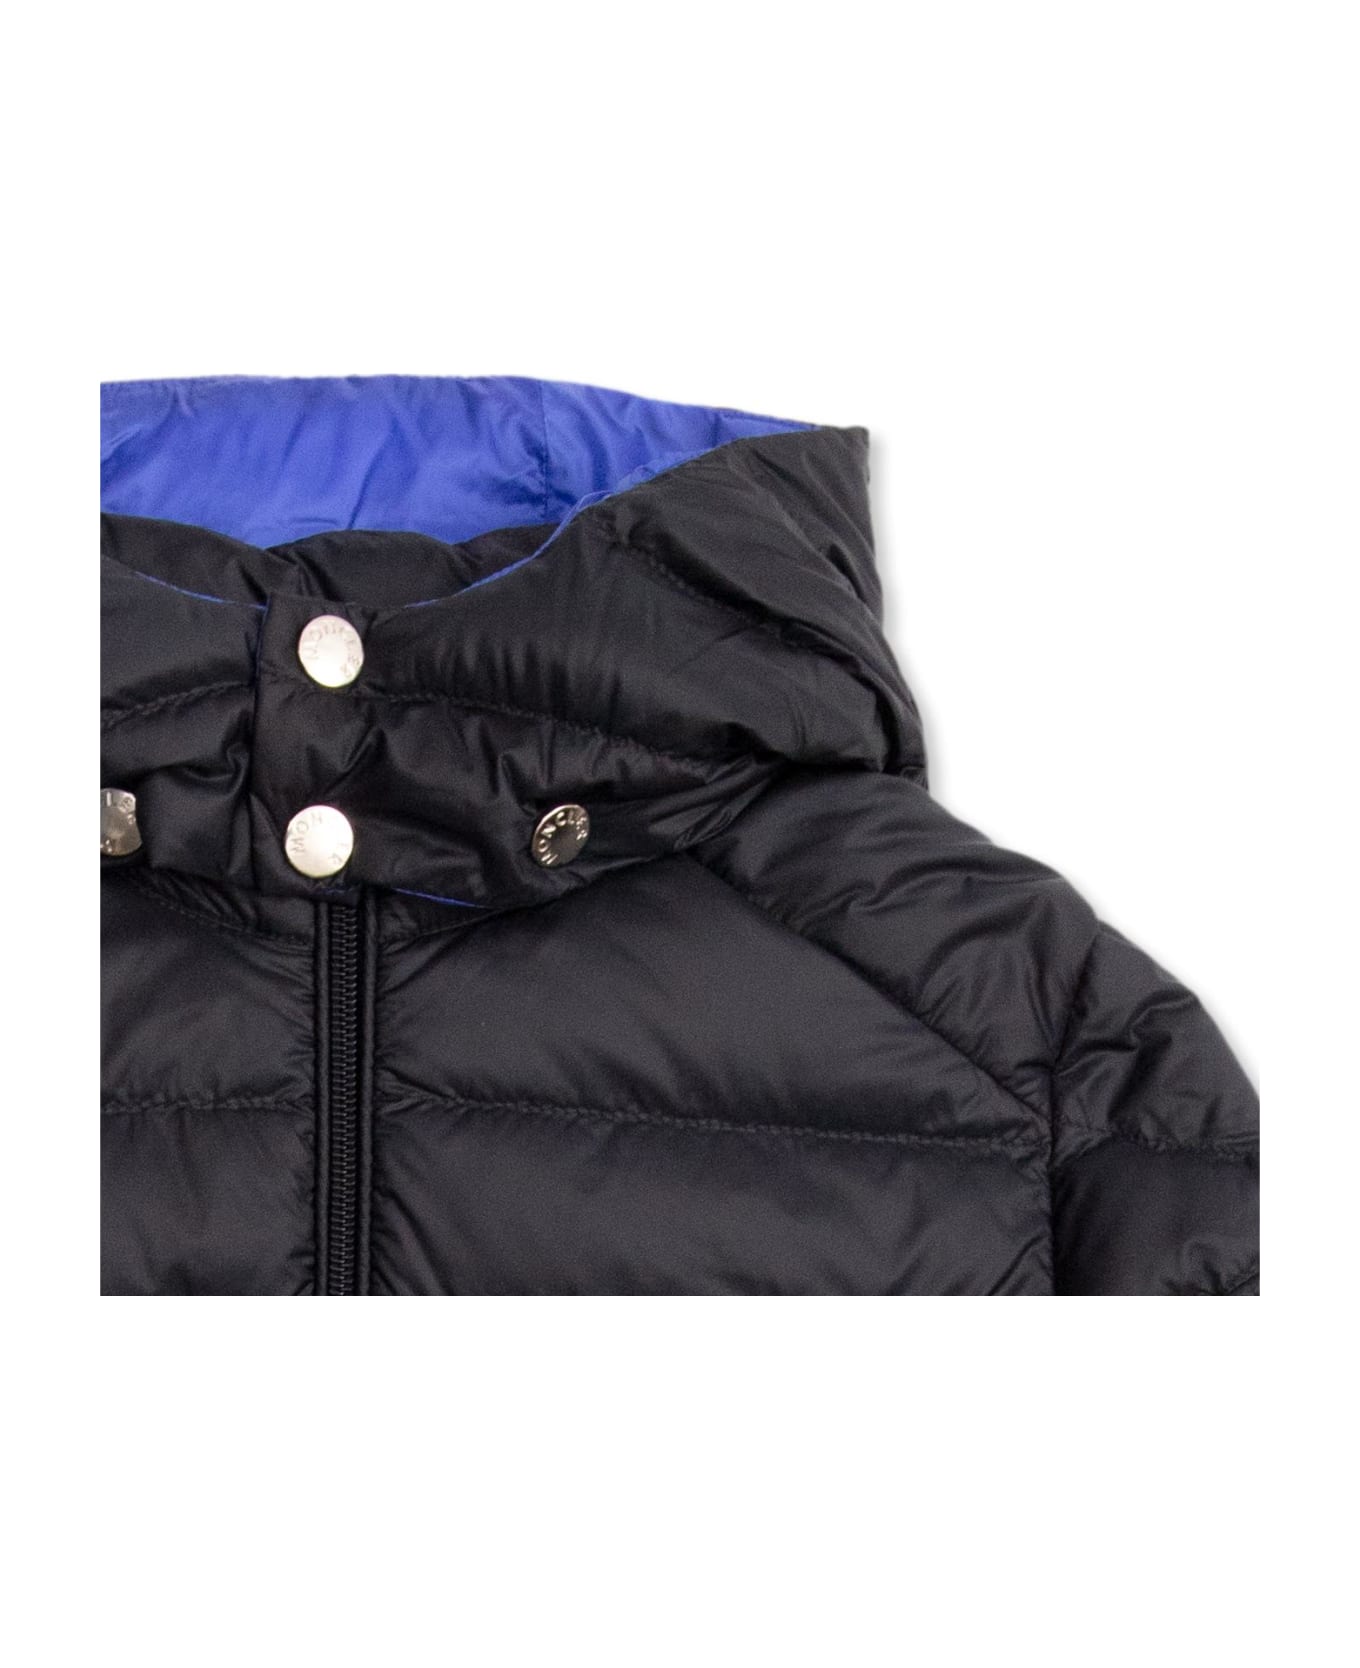 Moncler Enfant Jacket With Detachable Hood - Blue